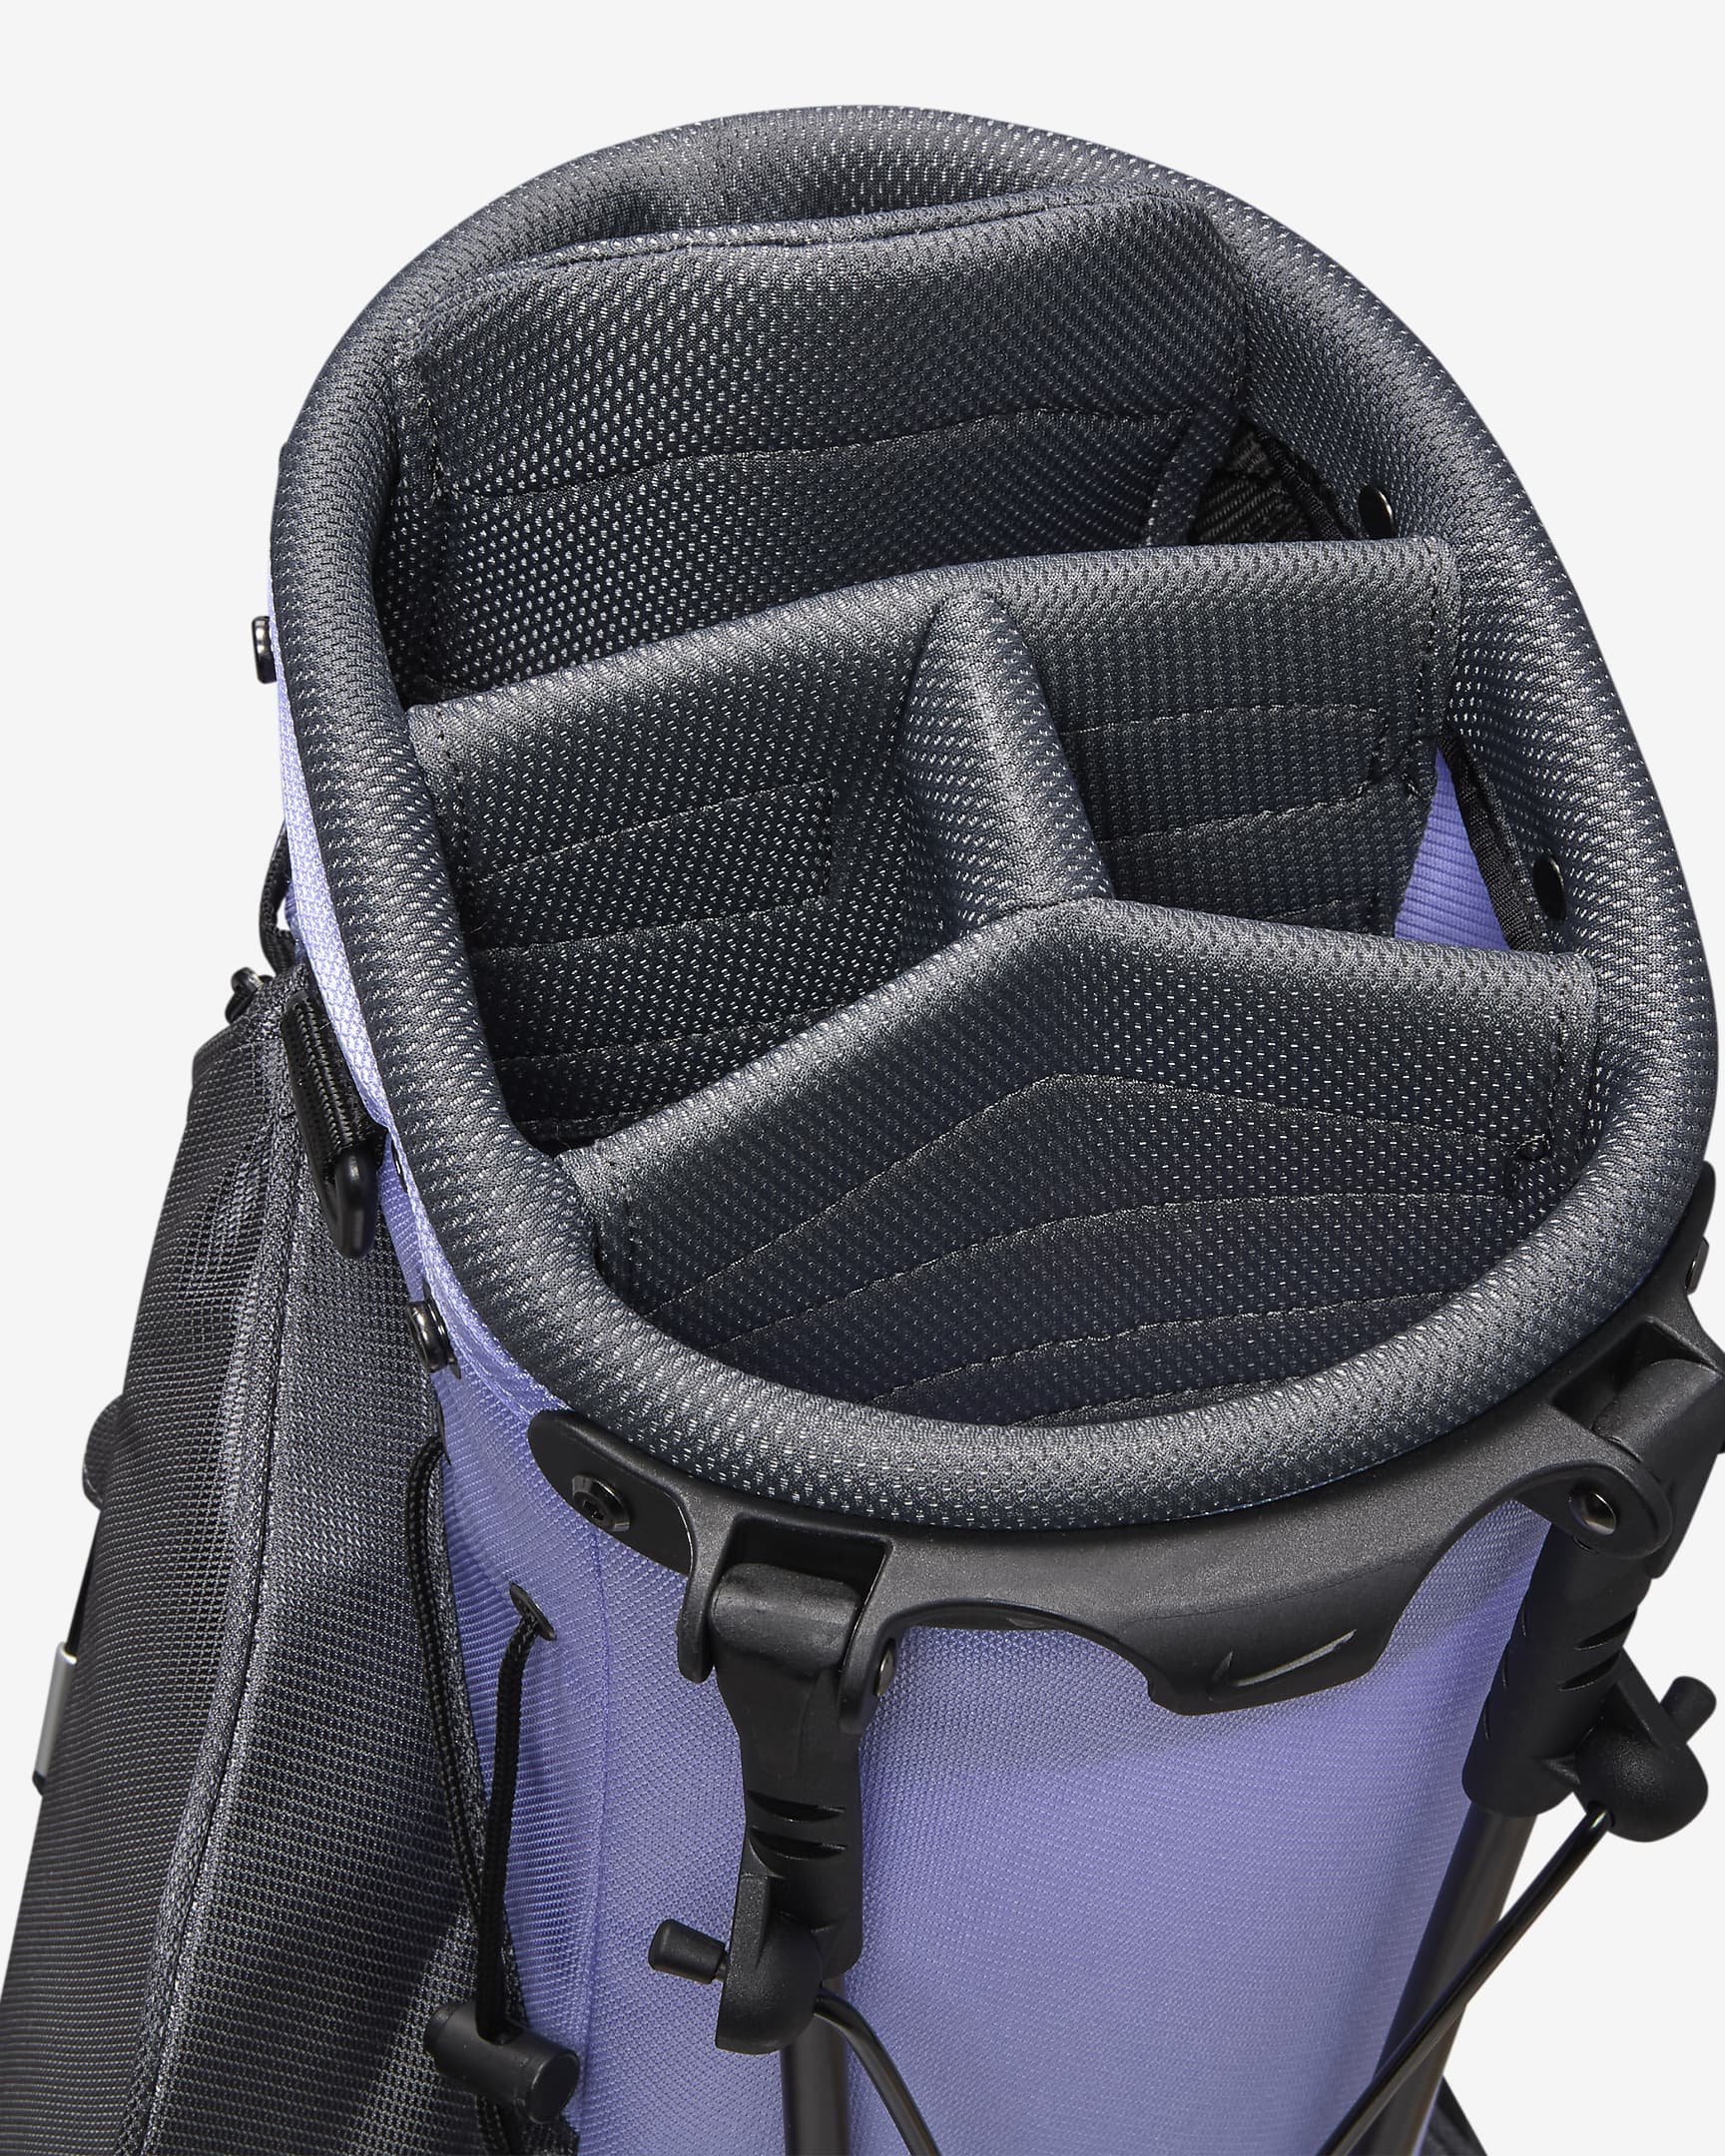 Nike Sport Lite Golf Bag - Purple